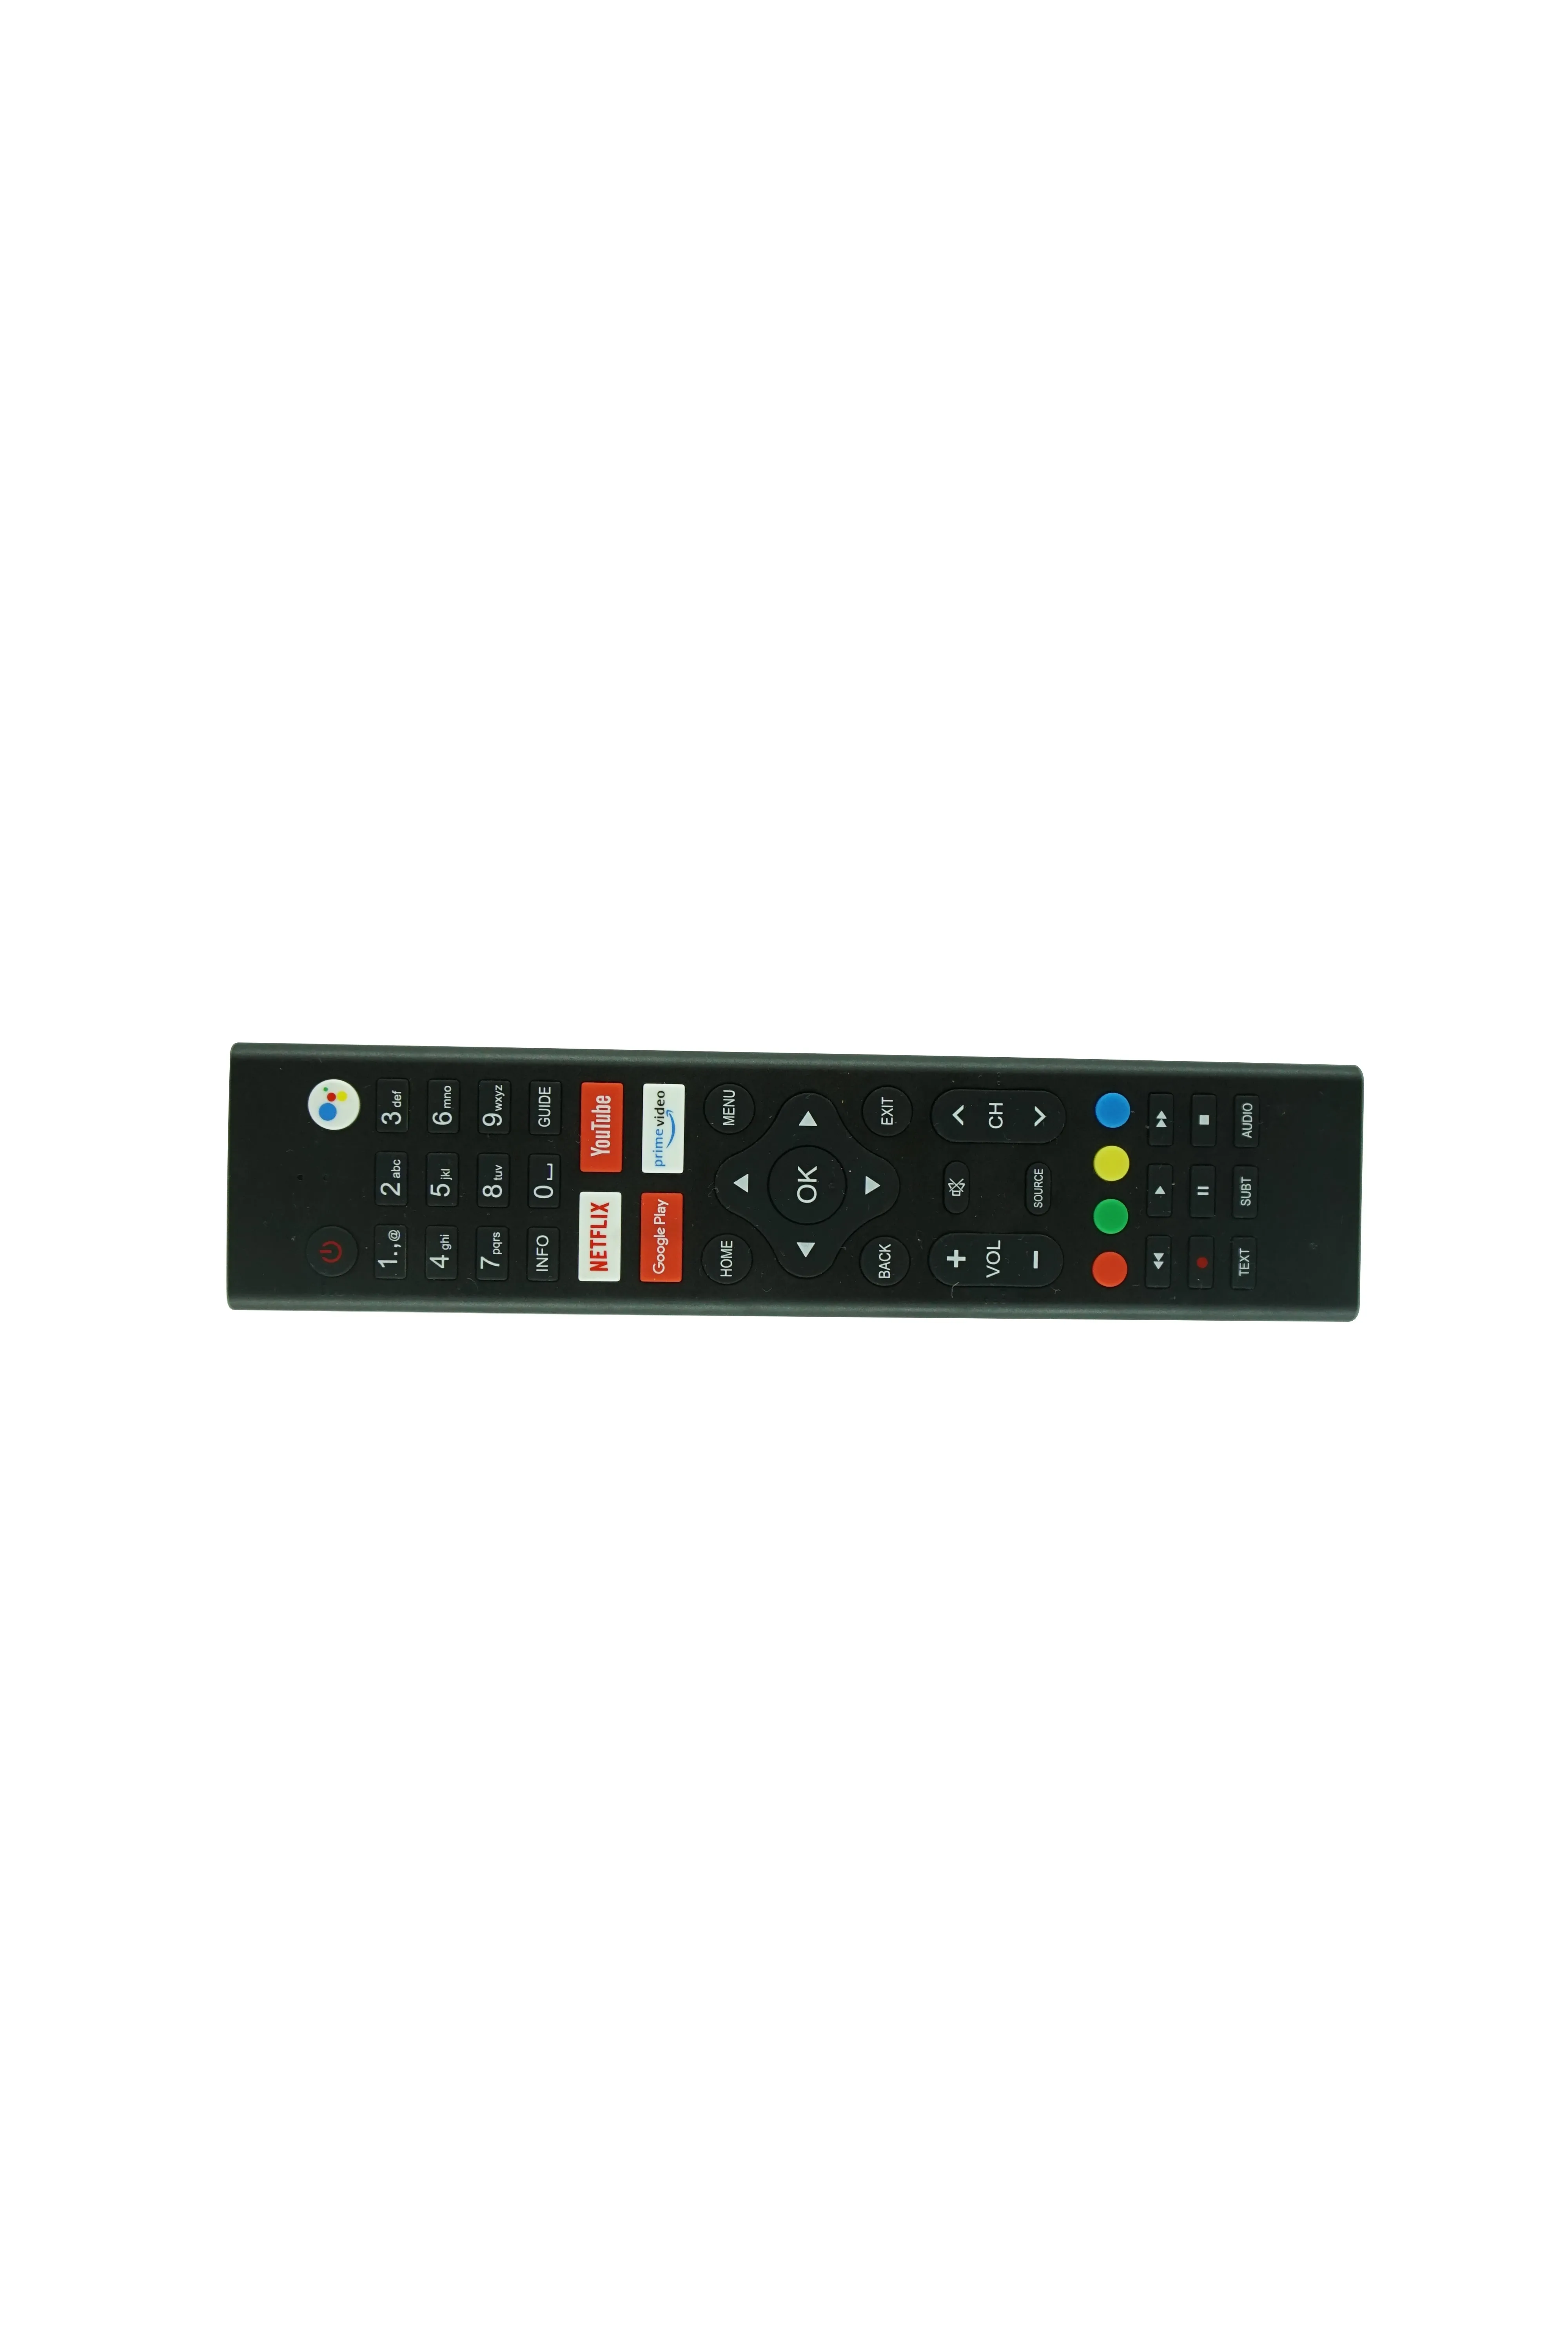 Voice Bluetooth Remote Control para Engel MD0523 LE4090ATV LE3290ATV LE2490AV LE4290ATV LE5090ATV SMART LCD HDTV Android TV